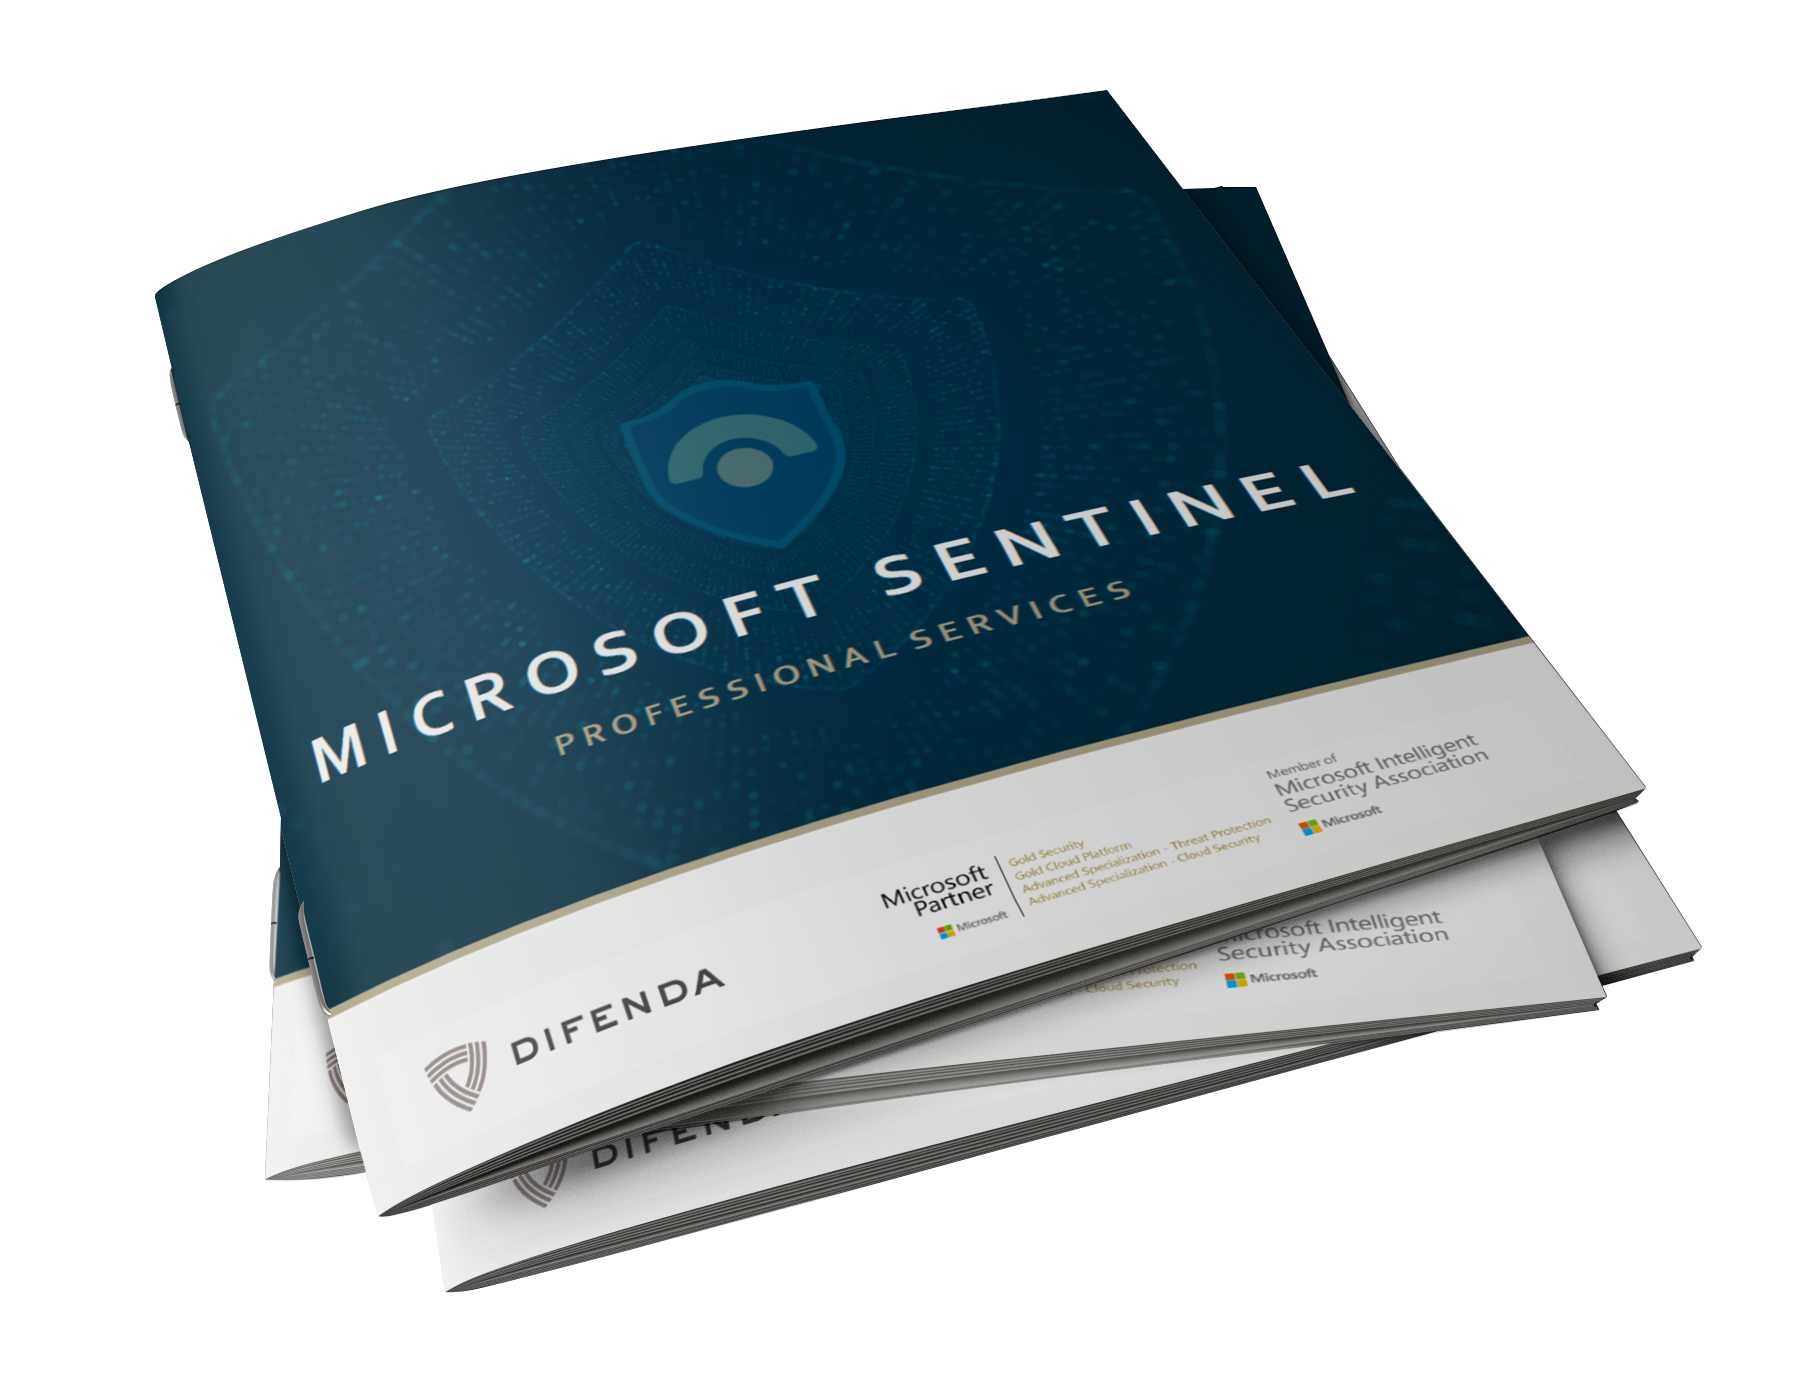 Sentinel Ebook